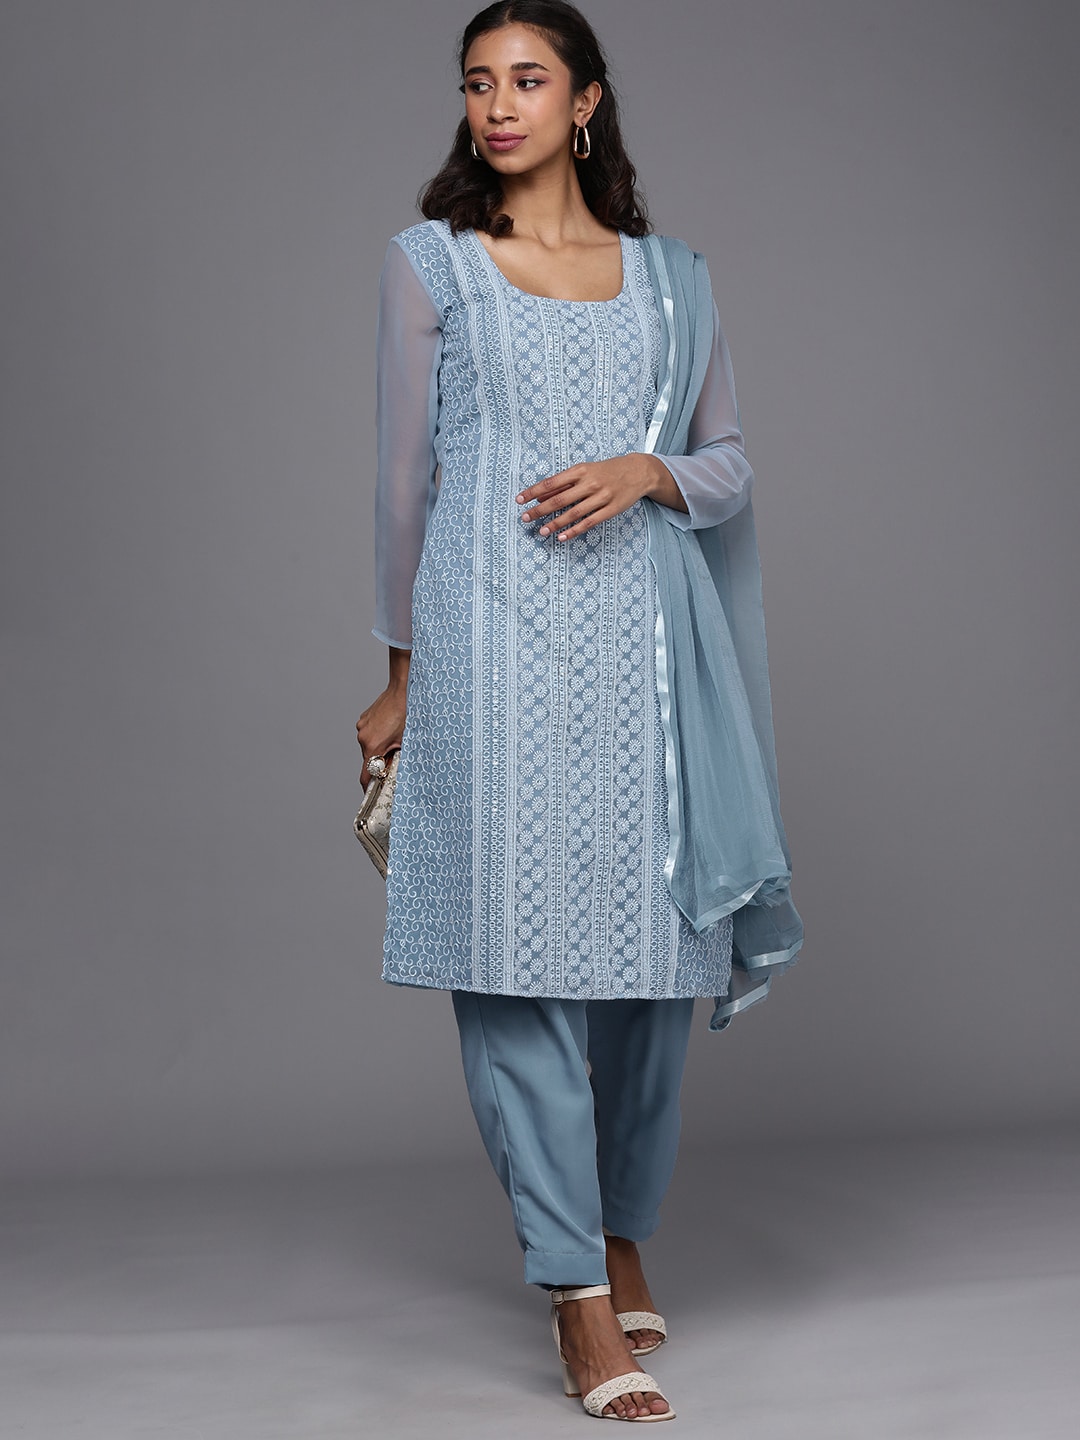 Mitera Blue Chikankari Embroidered Unstitched Dress Material Price in India